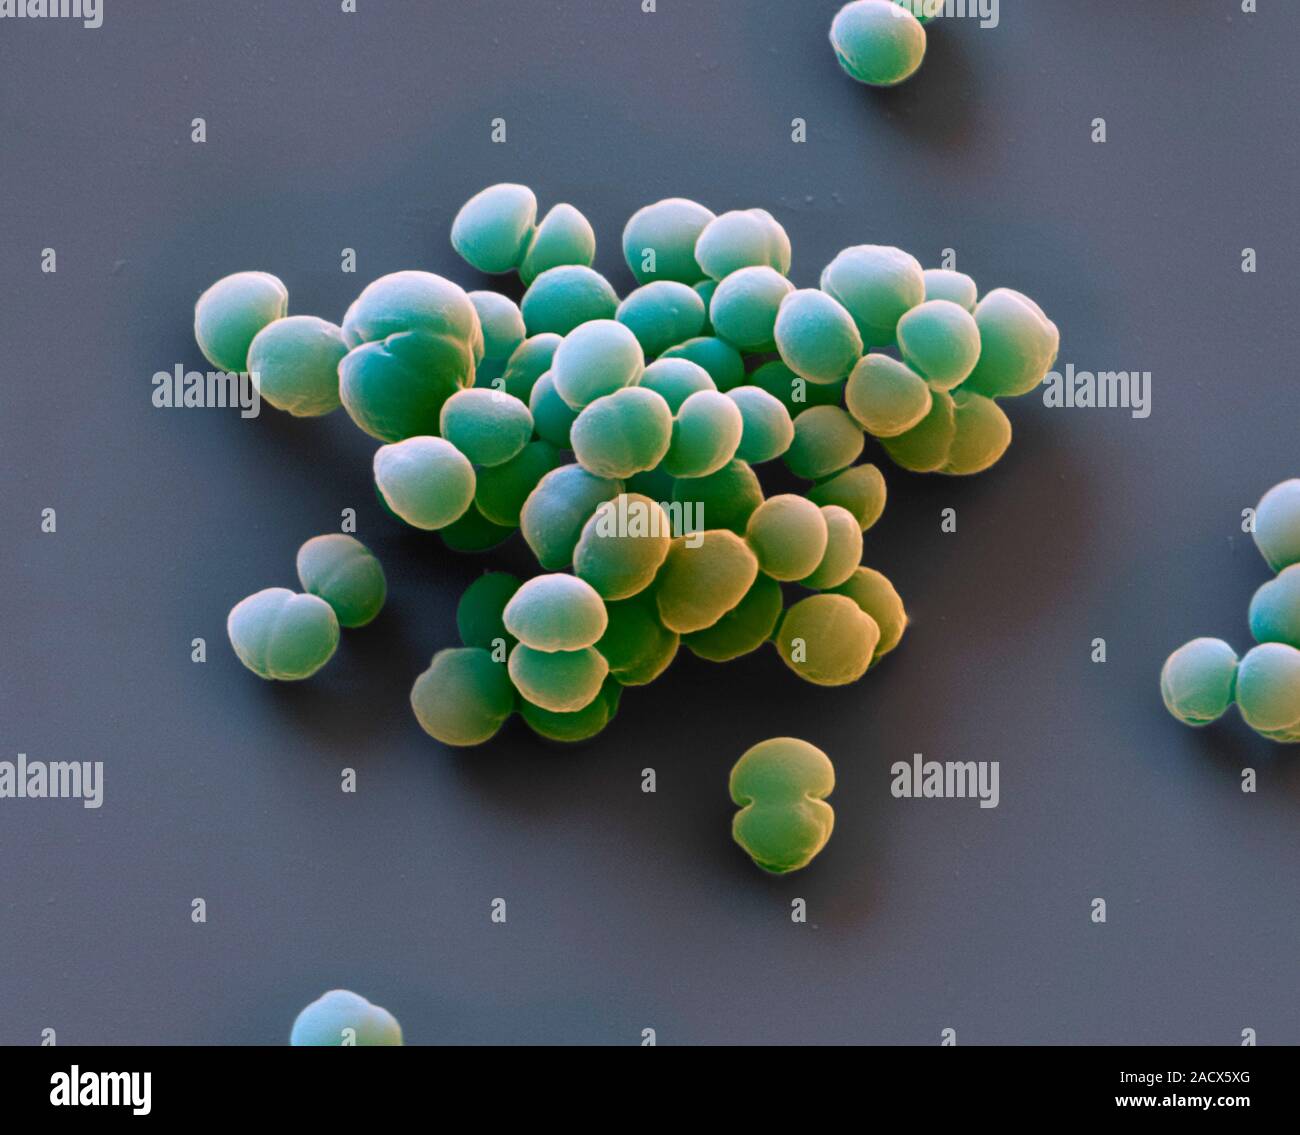 Staphylococcus epidermidis bacteria, coloured scanning electron ...